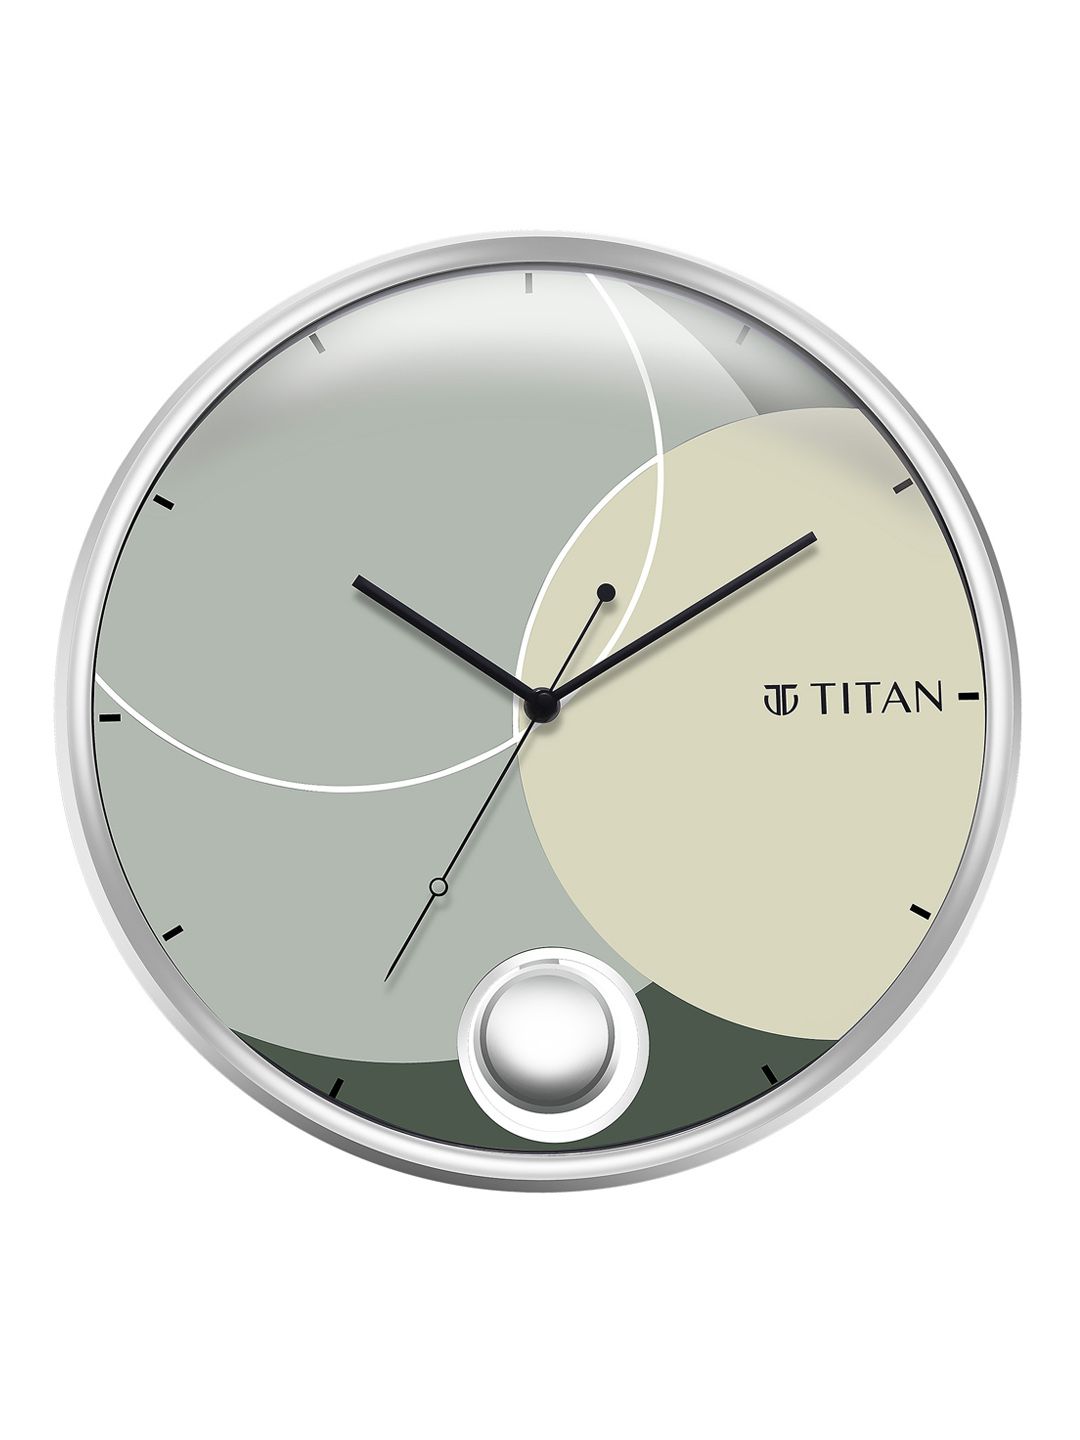 Titan Unisex Silver Clocks Price in India